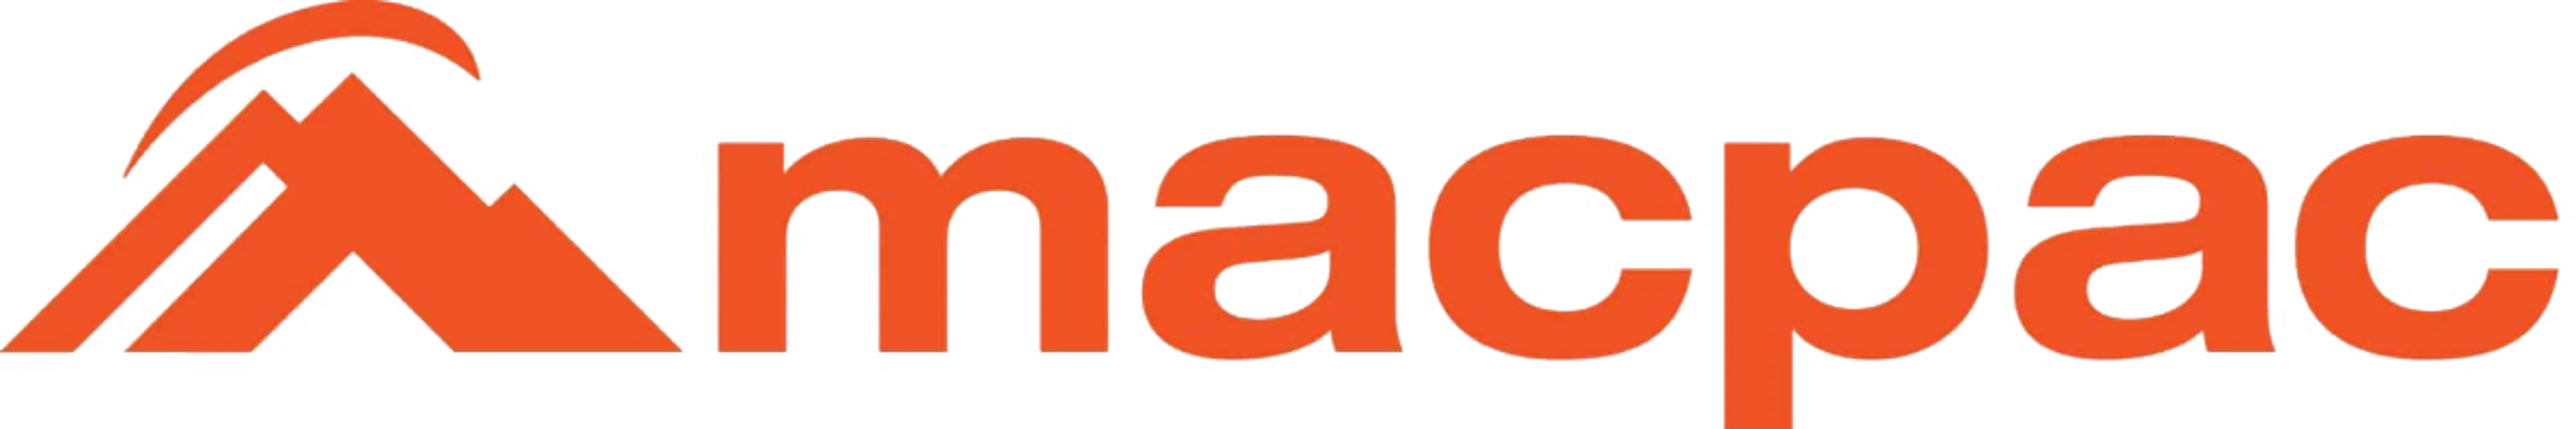 MACPAC logo